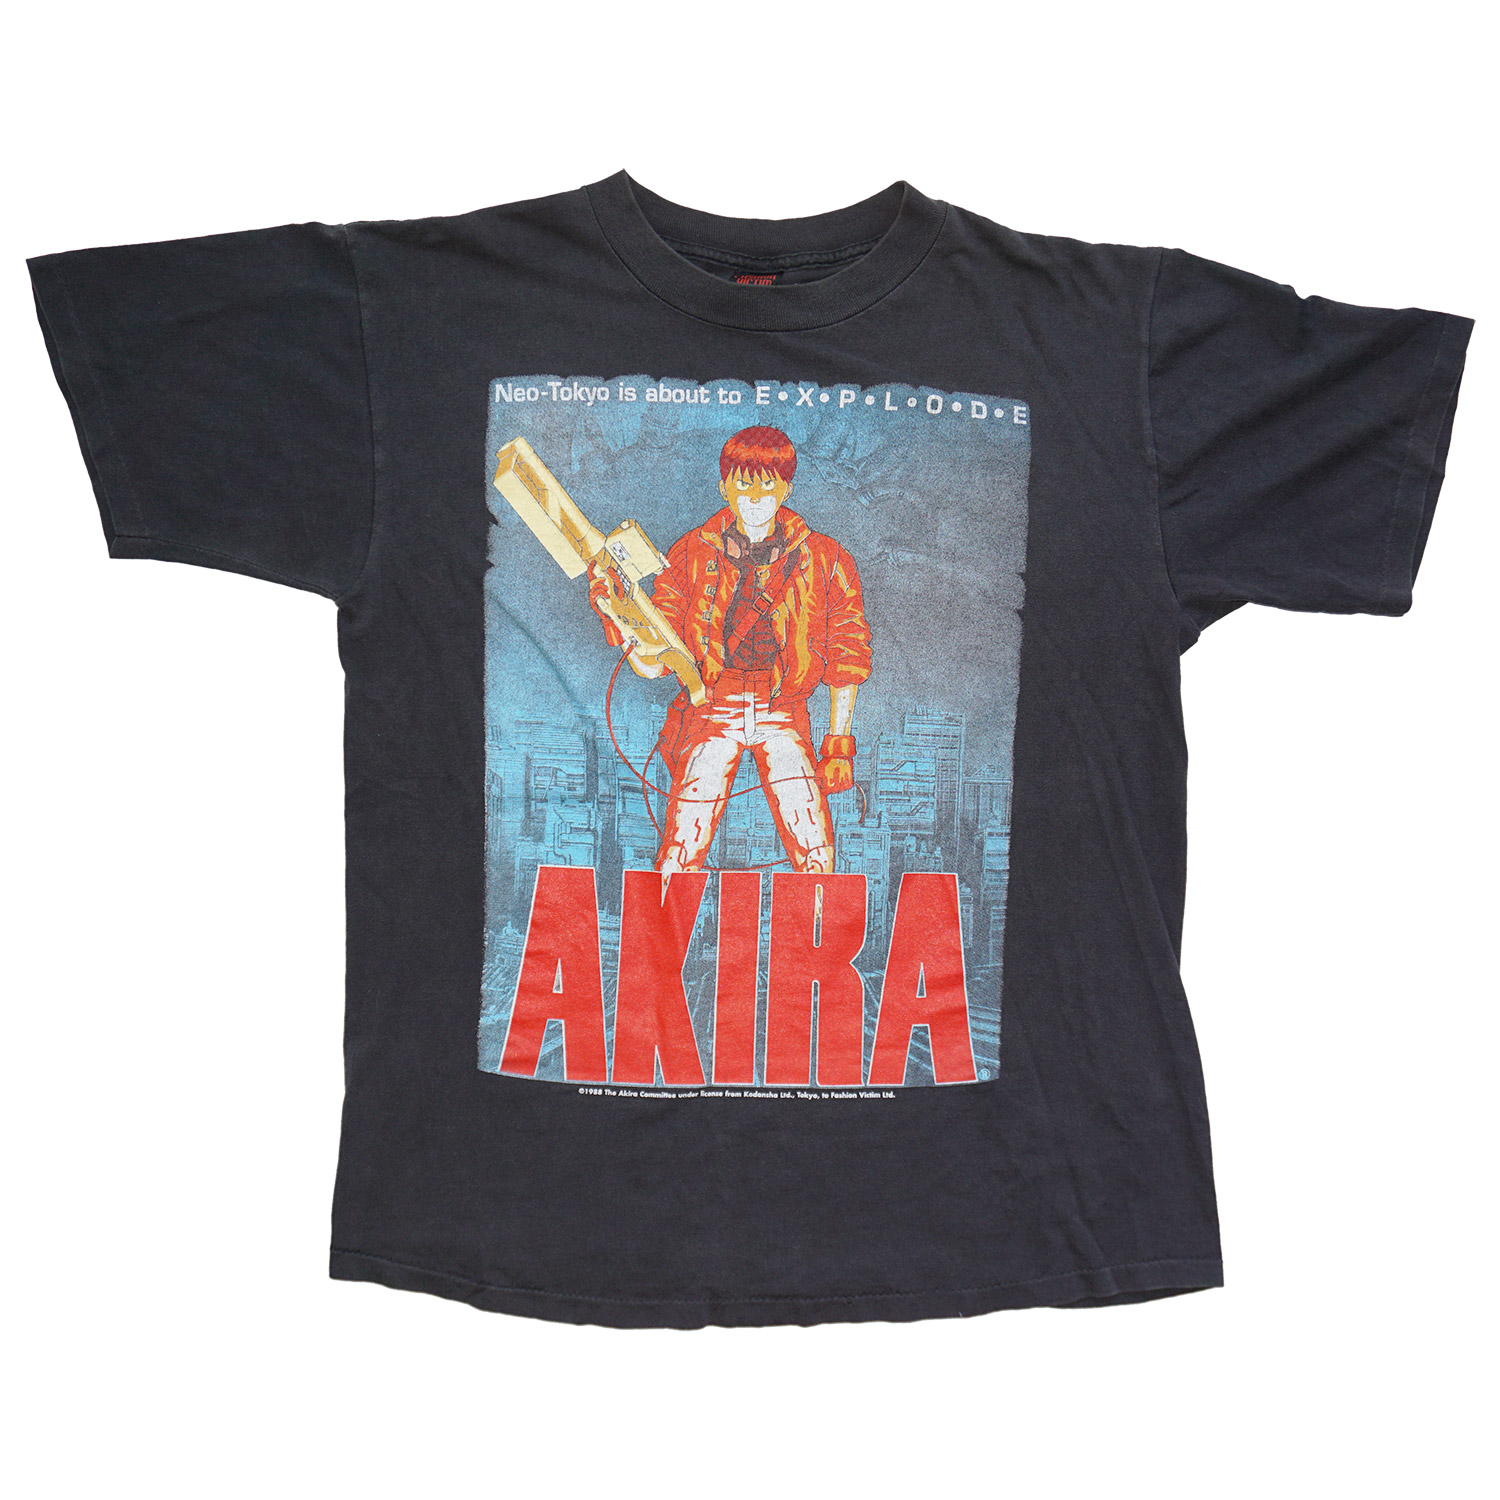 Vintage Akira T-shirt, Kaneda Fashion Victim | Black Shirts World